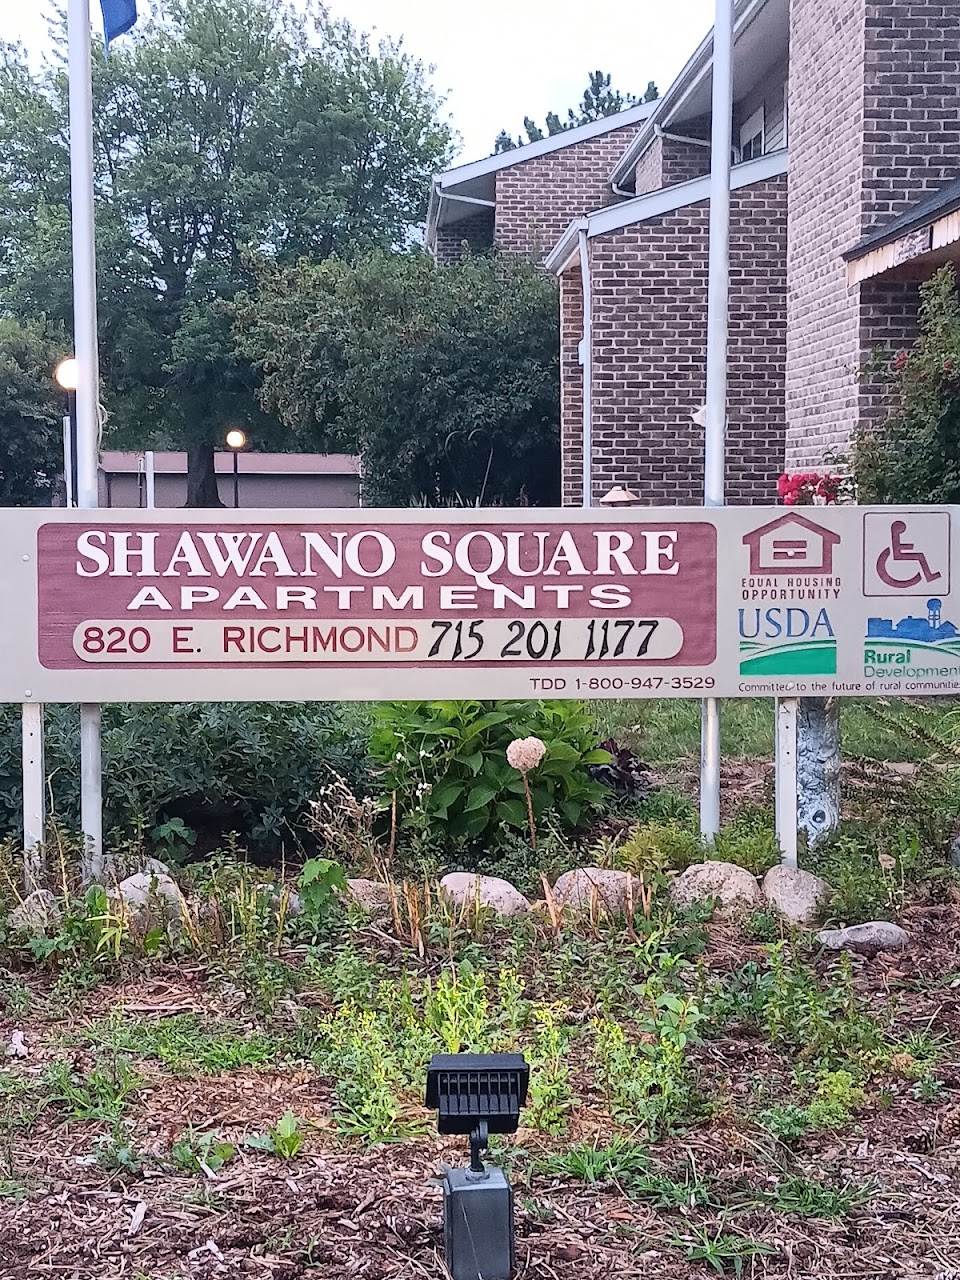 Photo of SHAWANO SQUARE. Affordable housing located at 820 E RICHMOND ST SHAWANO, WI 54166